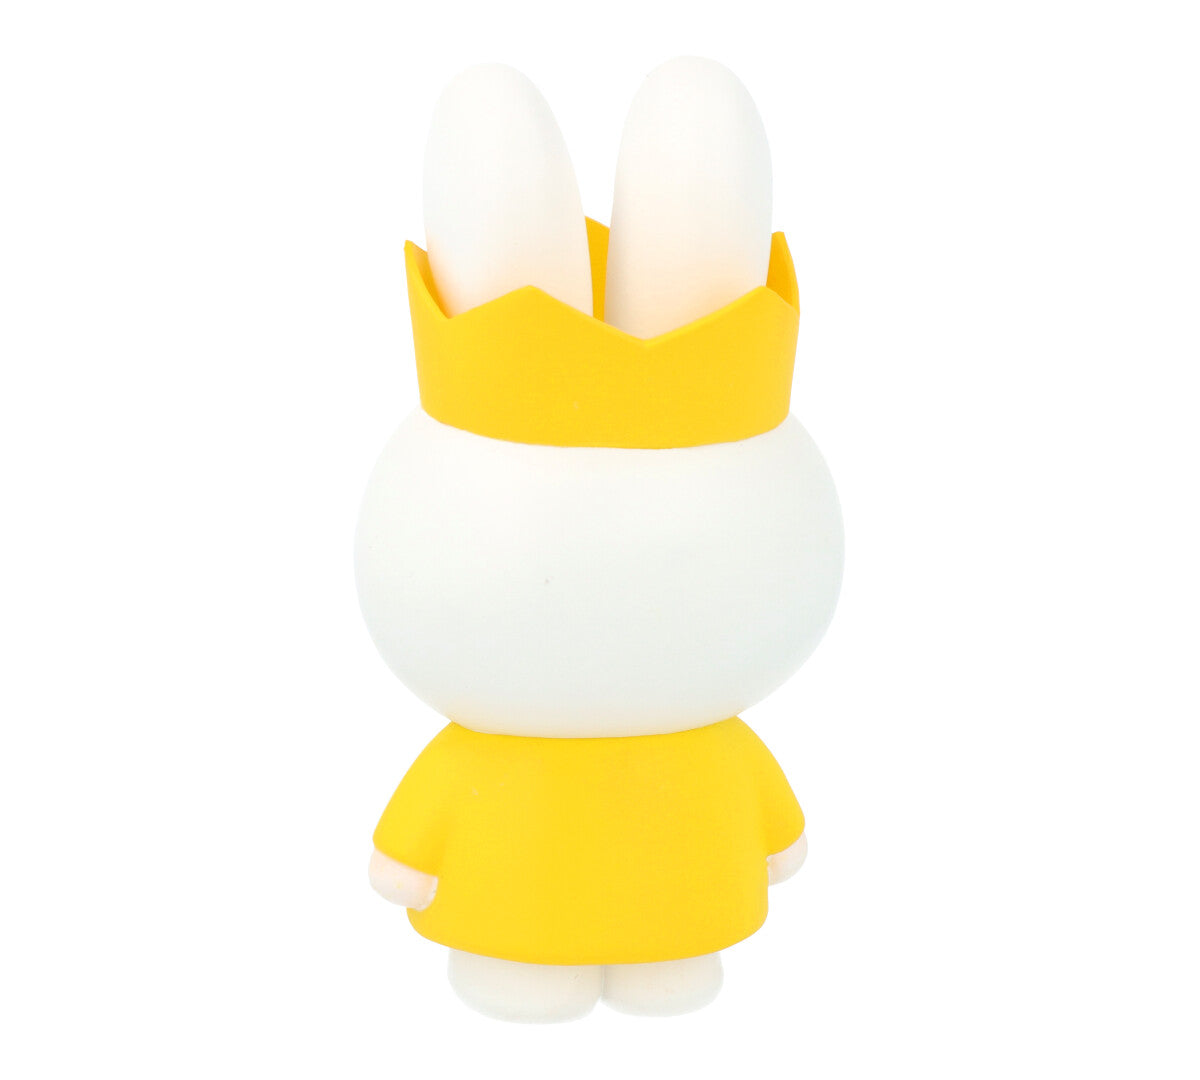 Figurine UDF Dick Bruna Series 4 - Crown Miffy